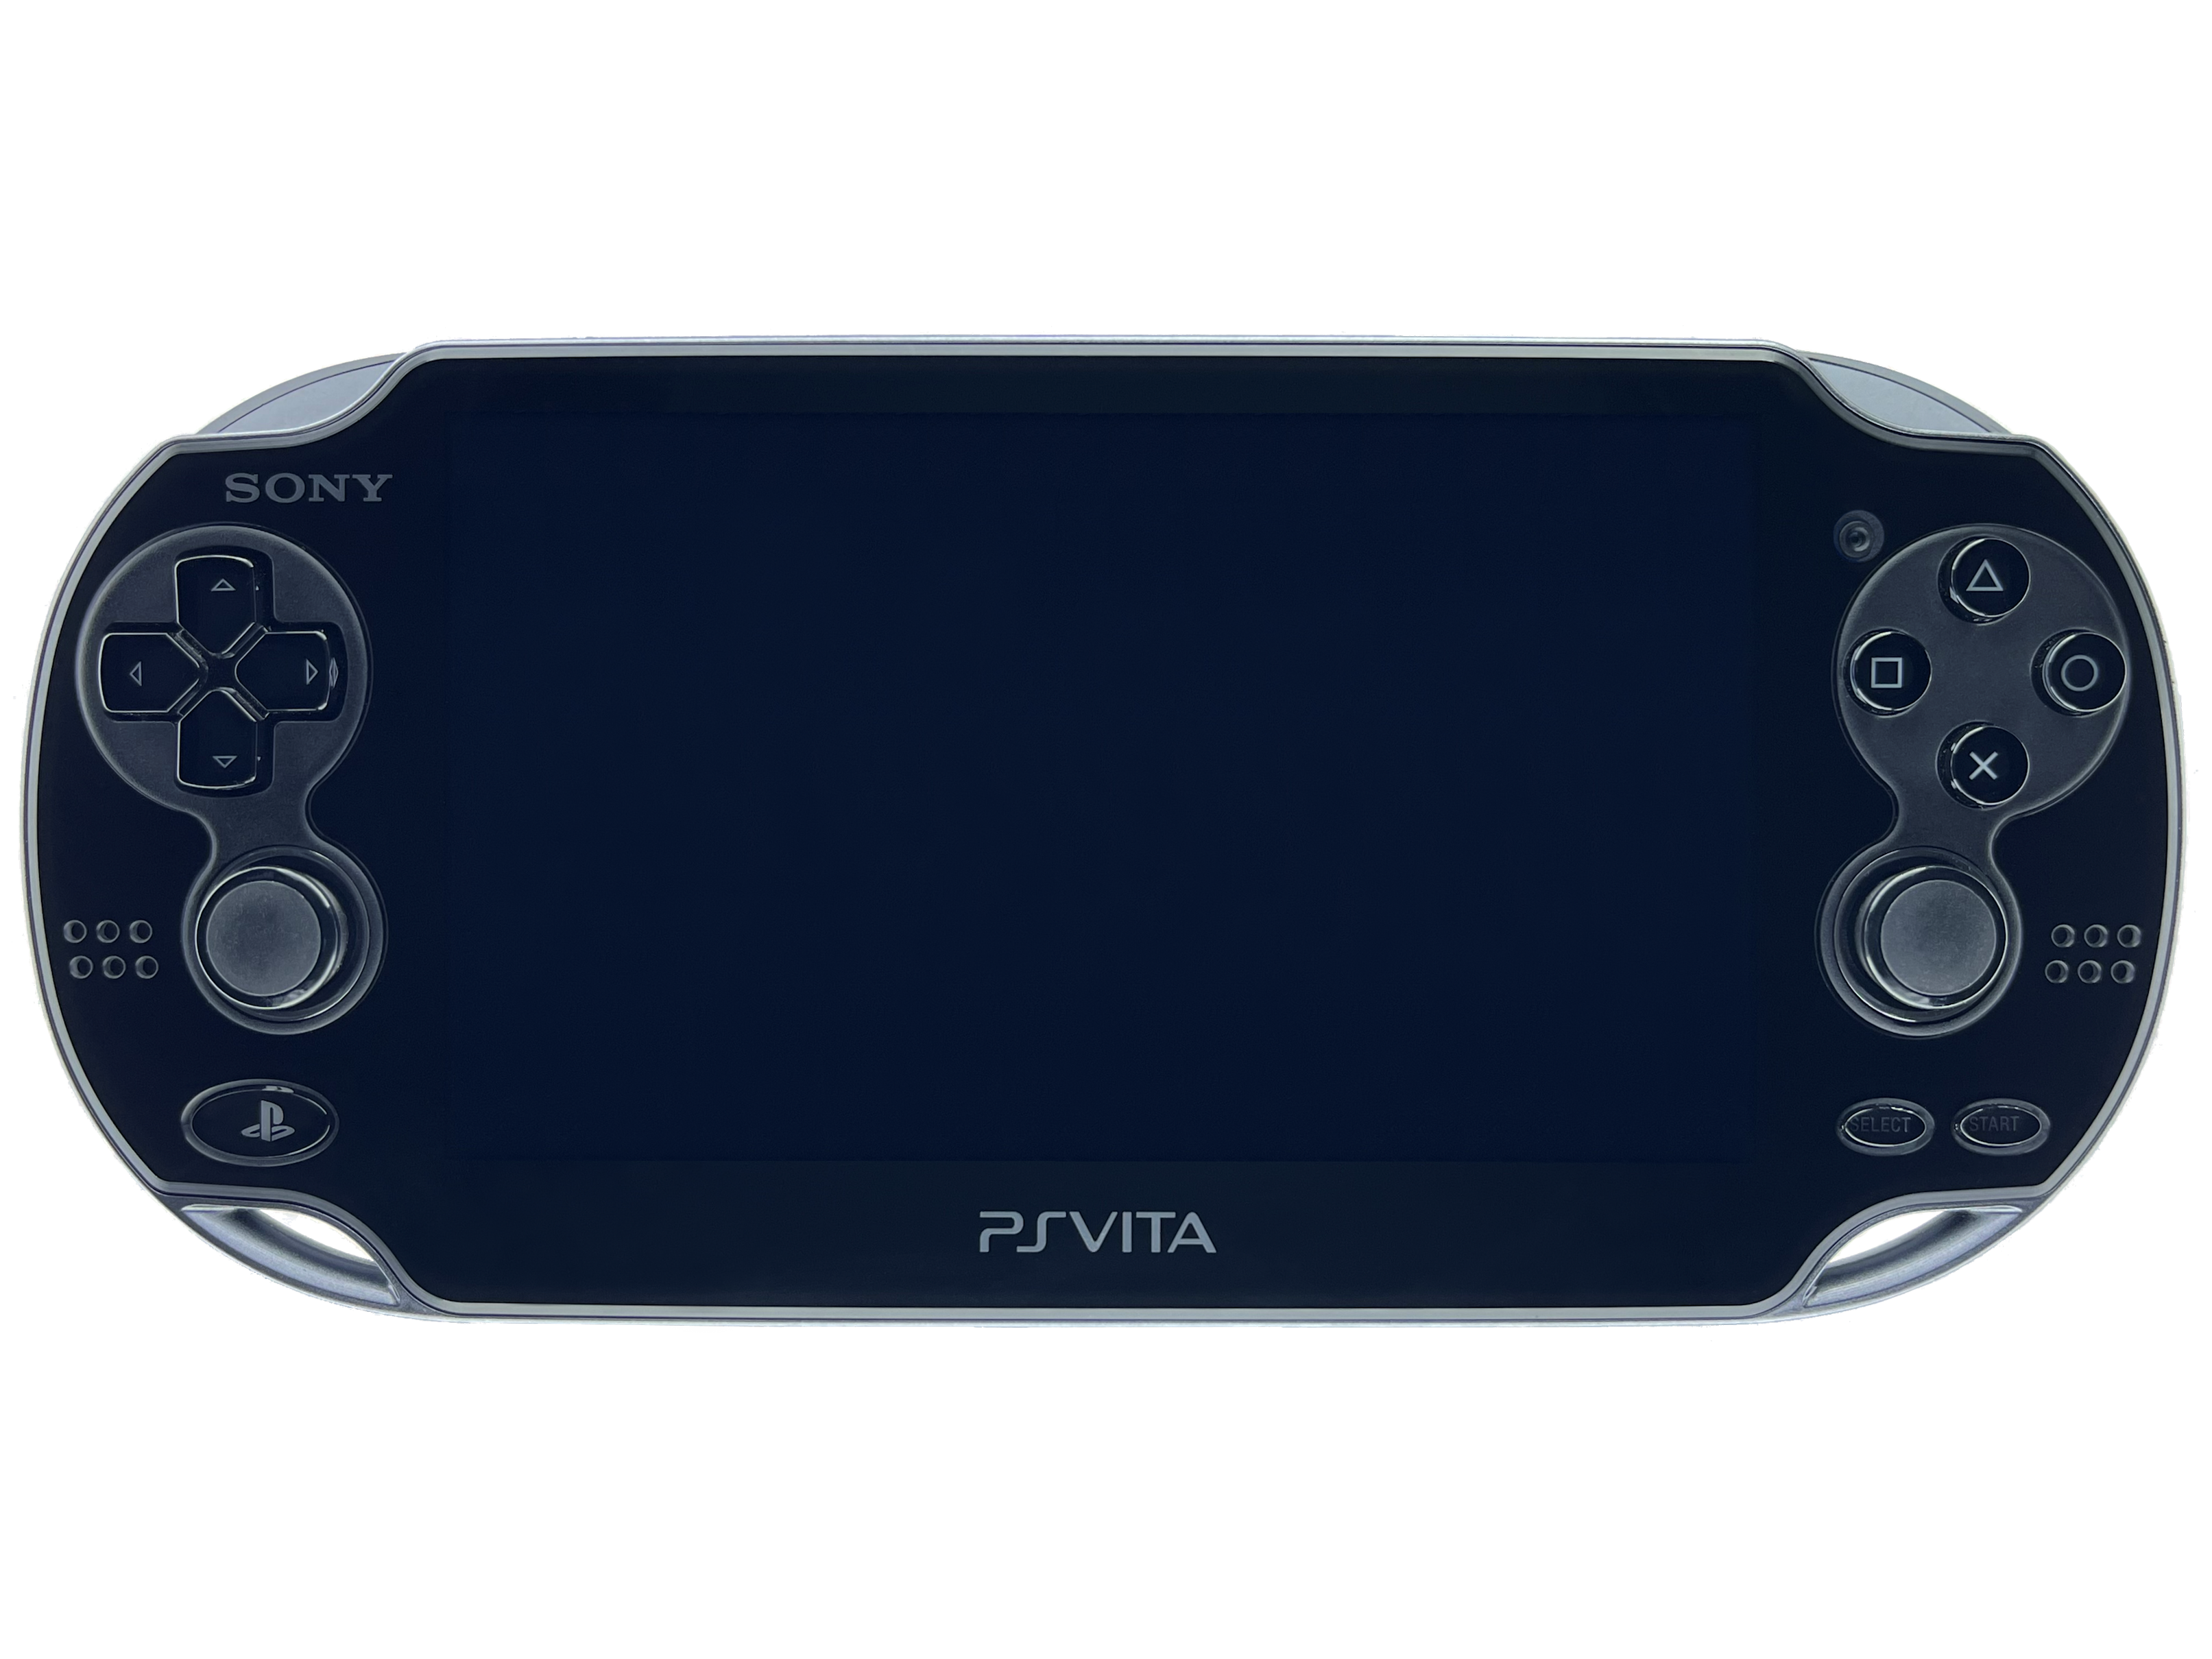  Sony PS Vita CEM-3000VD1 Prototype Console